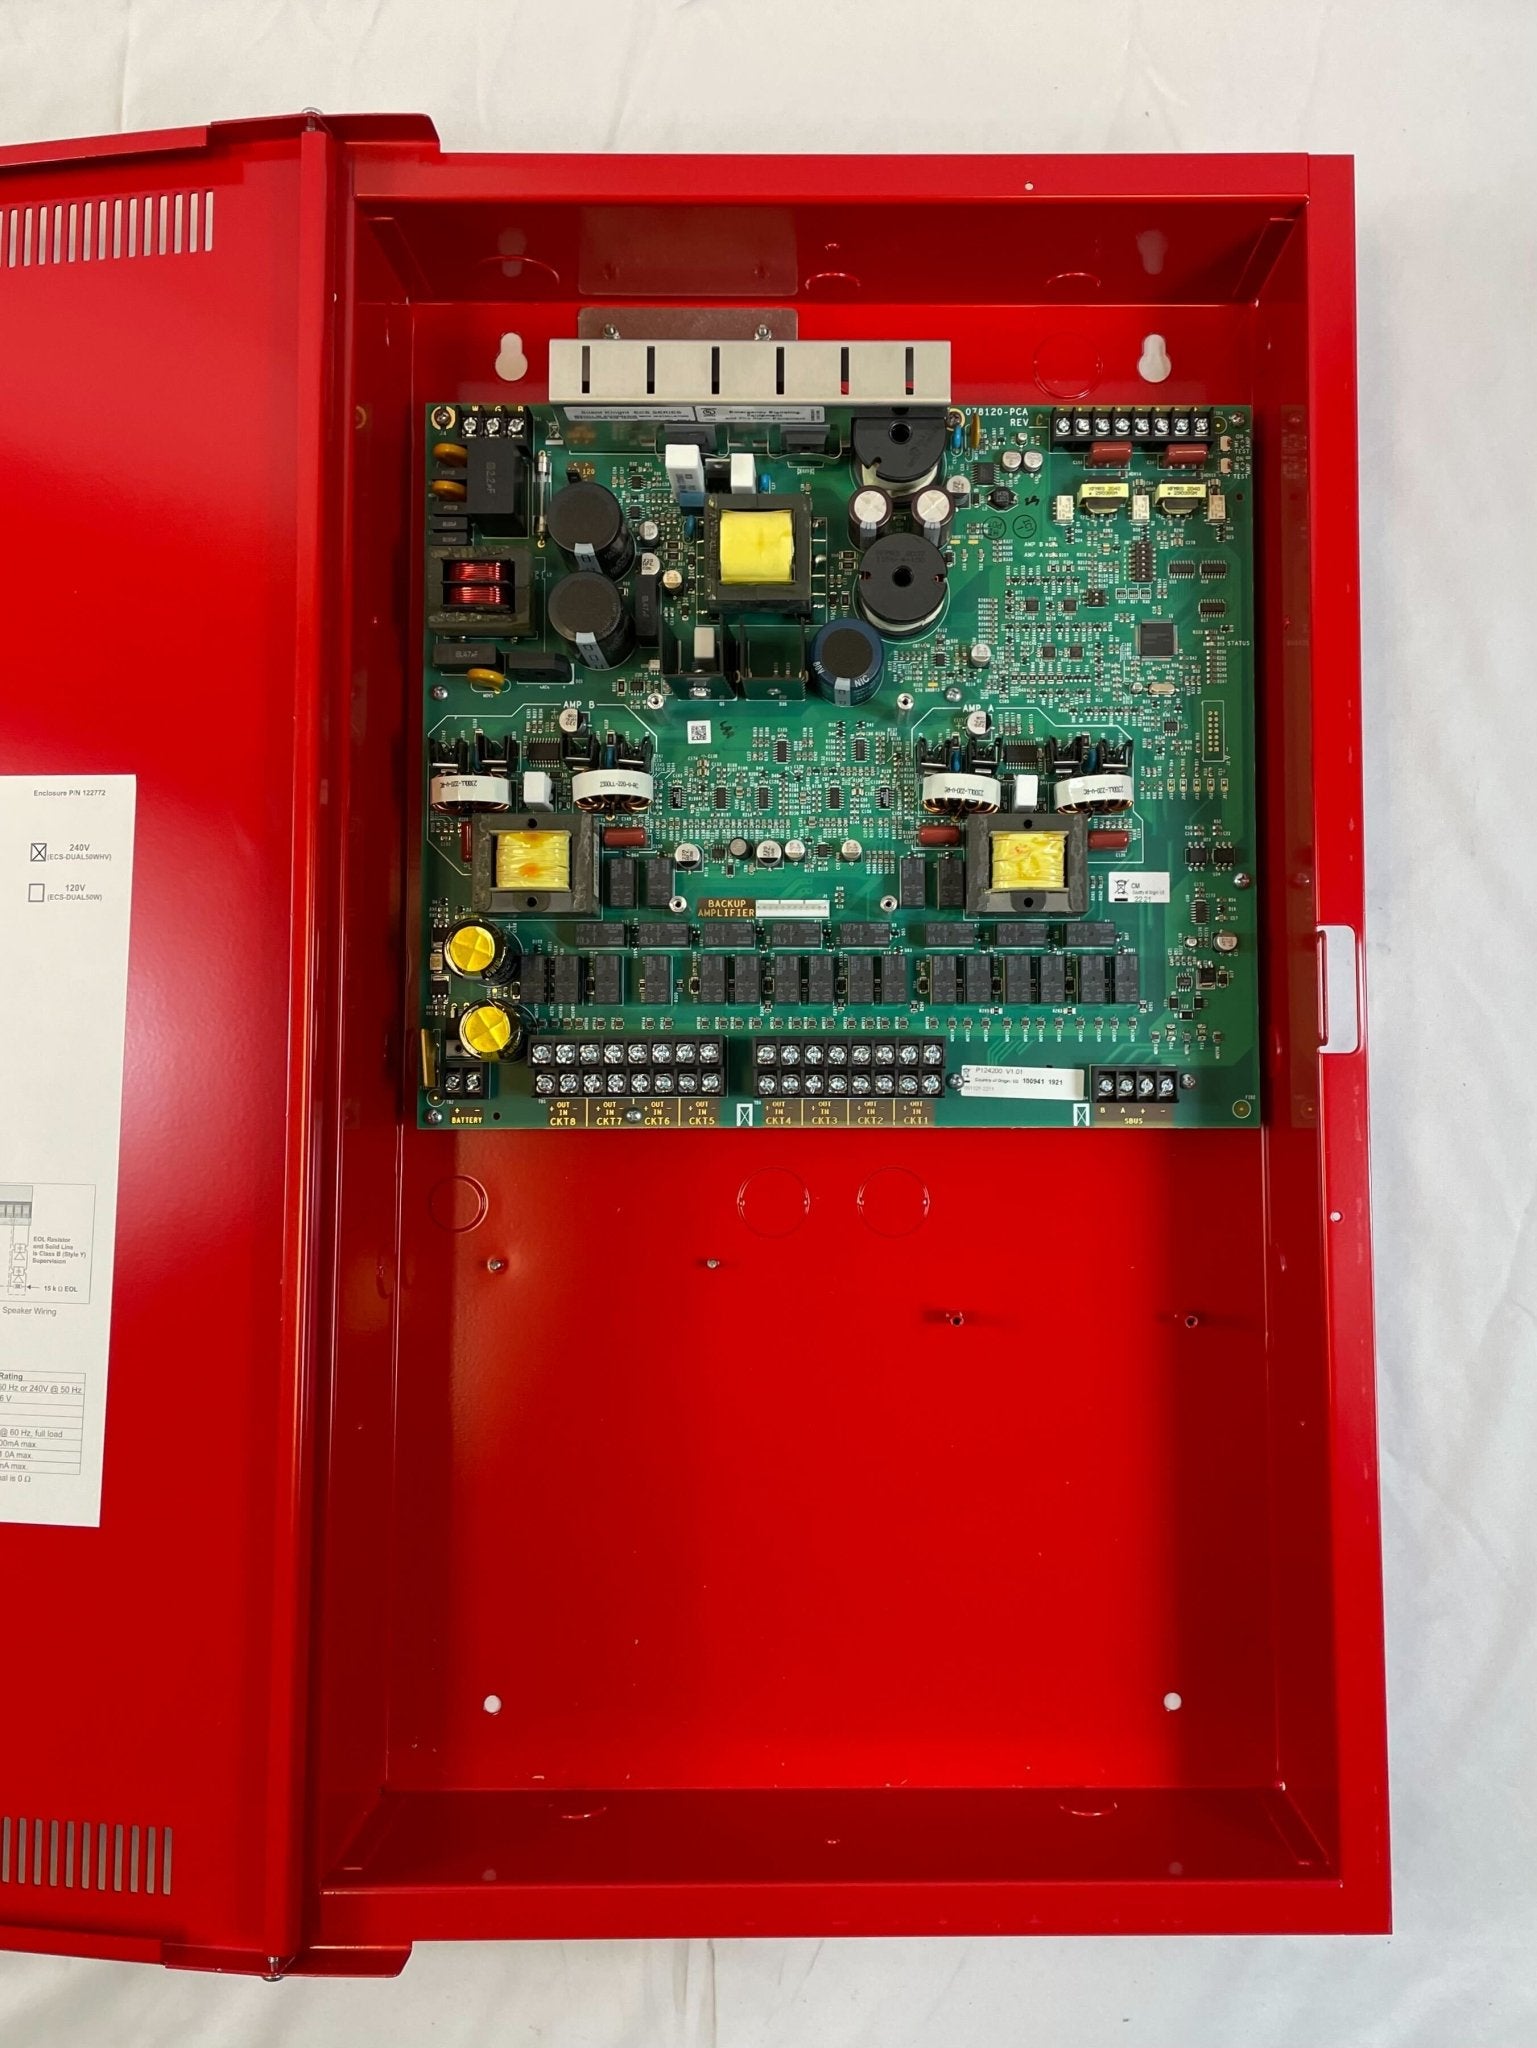 Silent Knight ECS-DUAL50WHV - The Fire Alarm Supplier